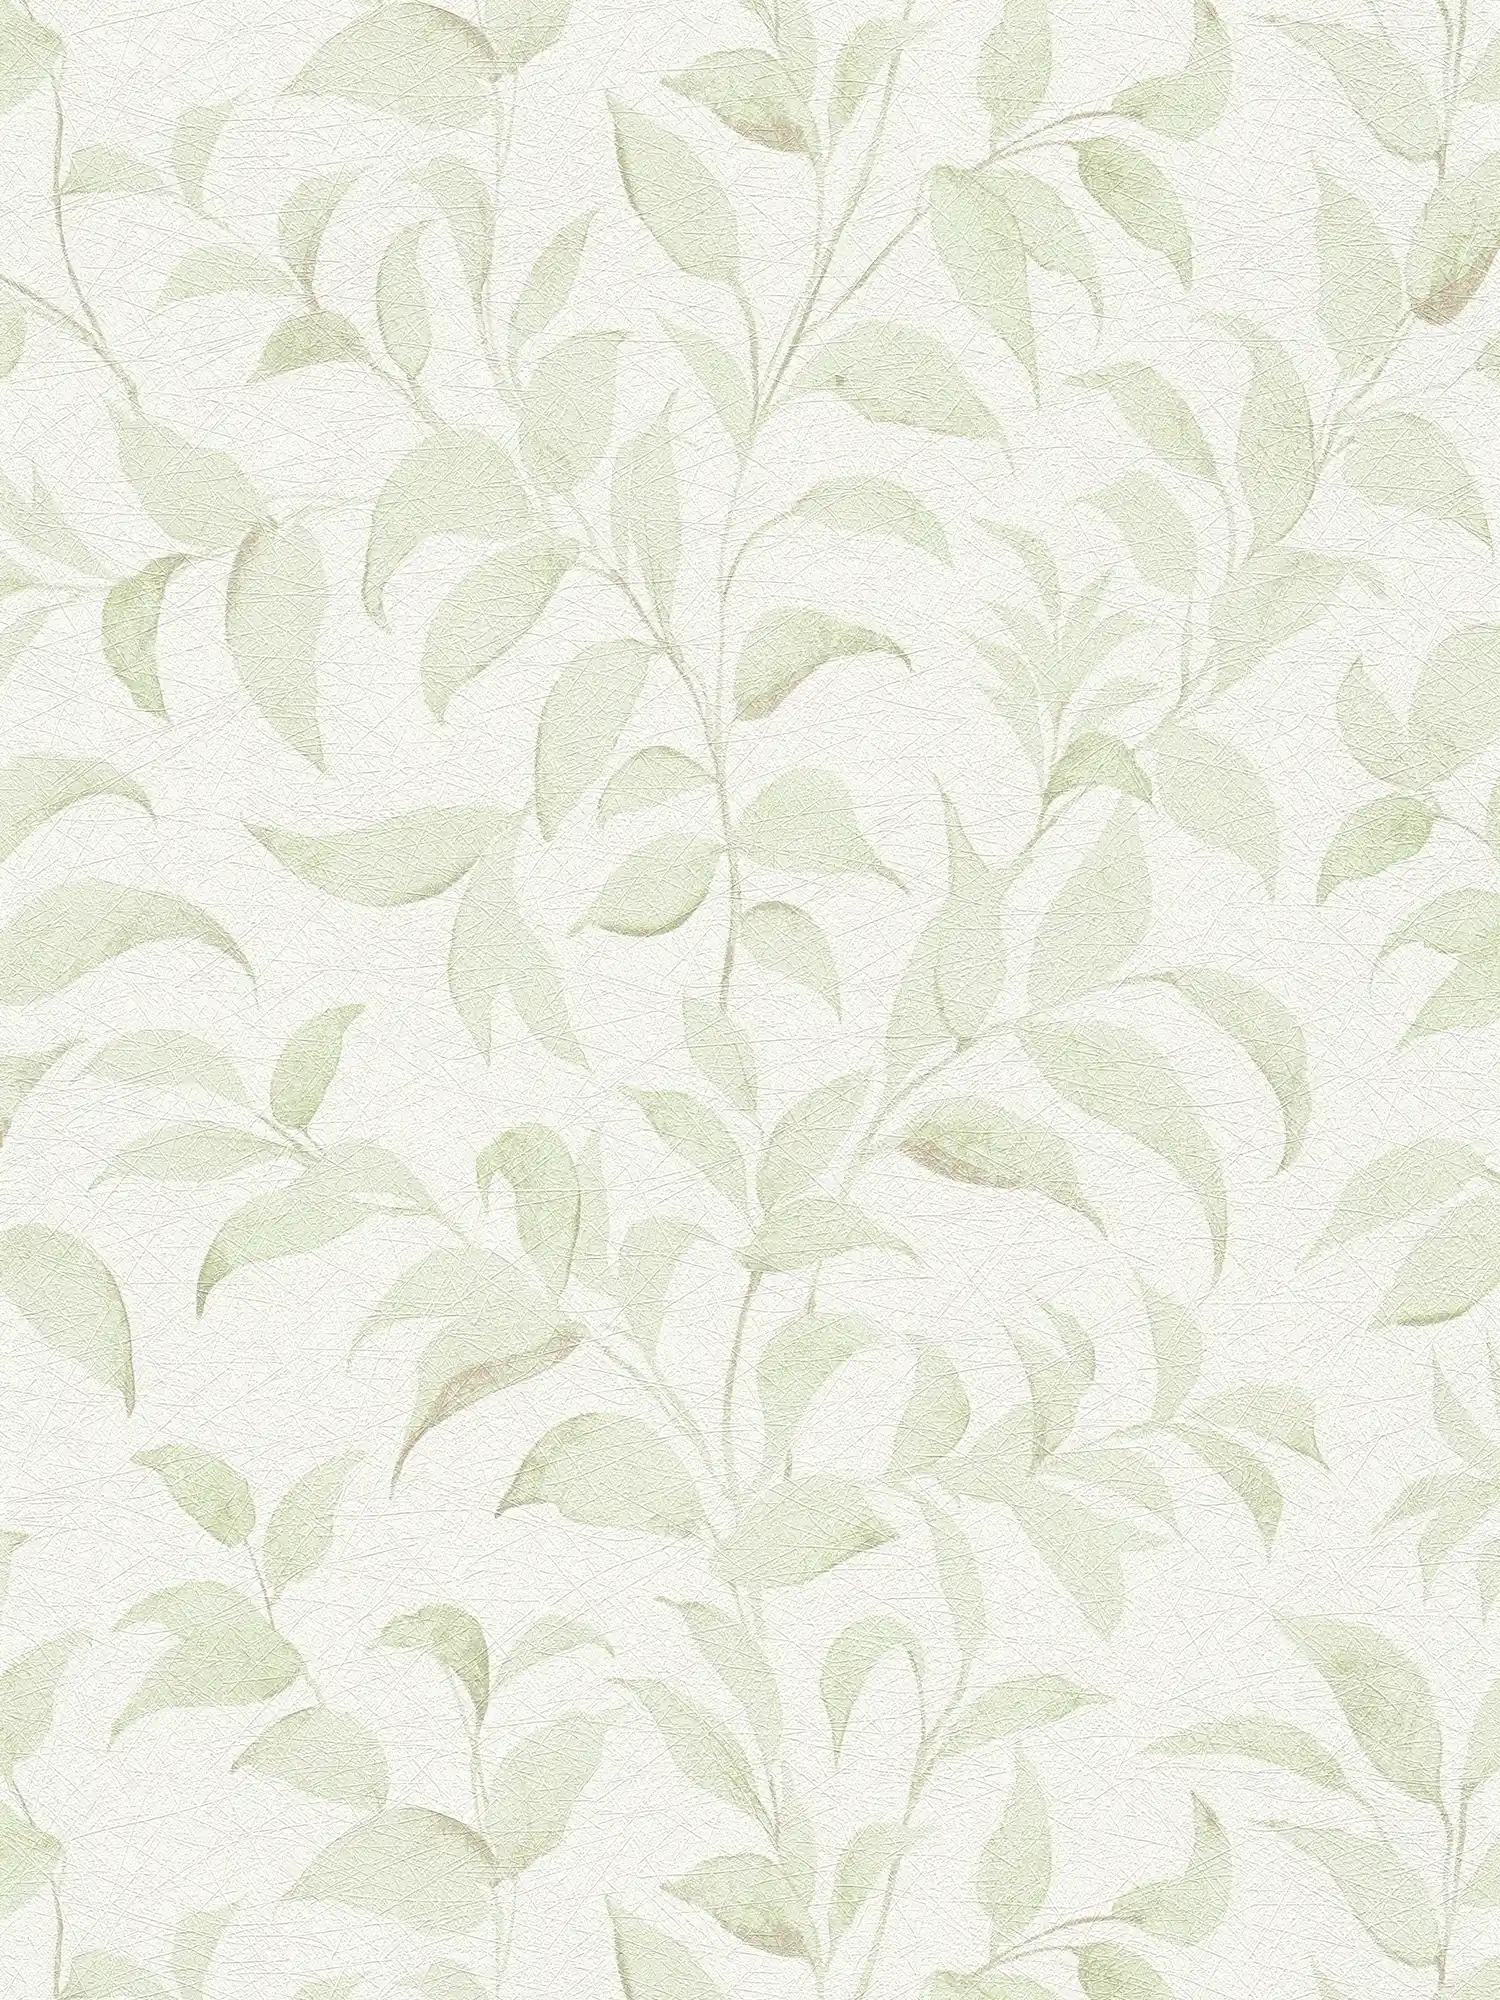 Leaves wallpaper floral shimmer textured - white, green
